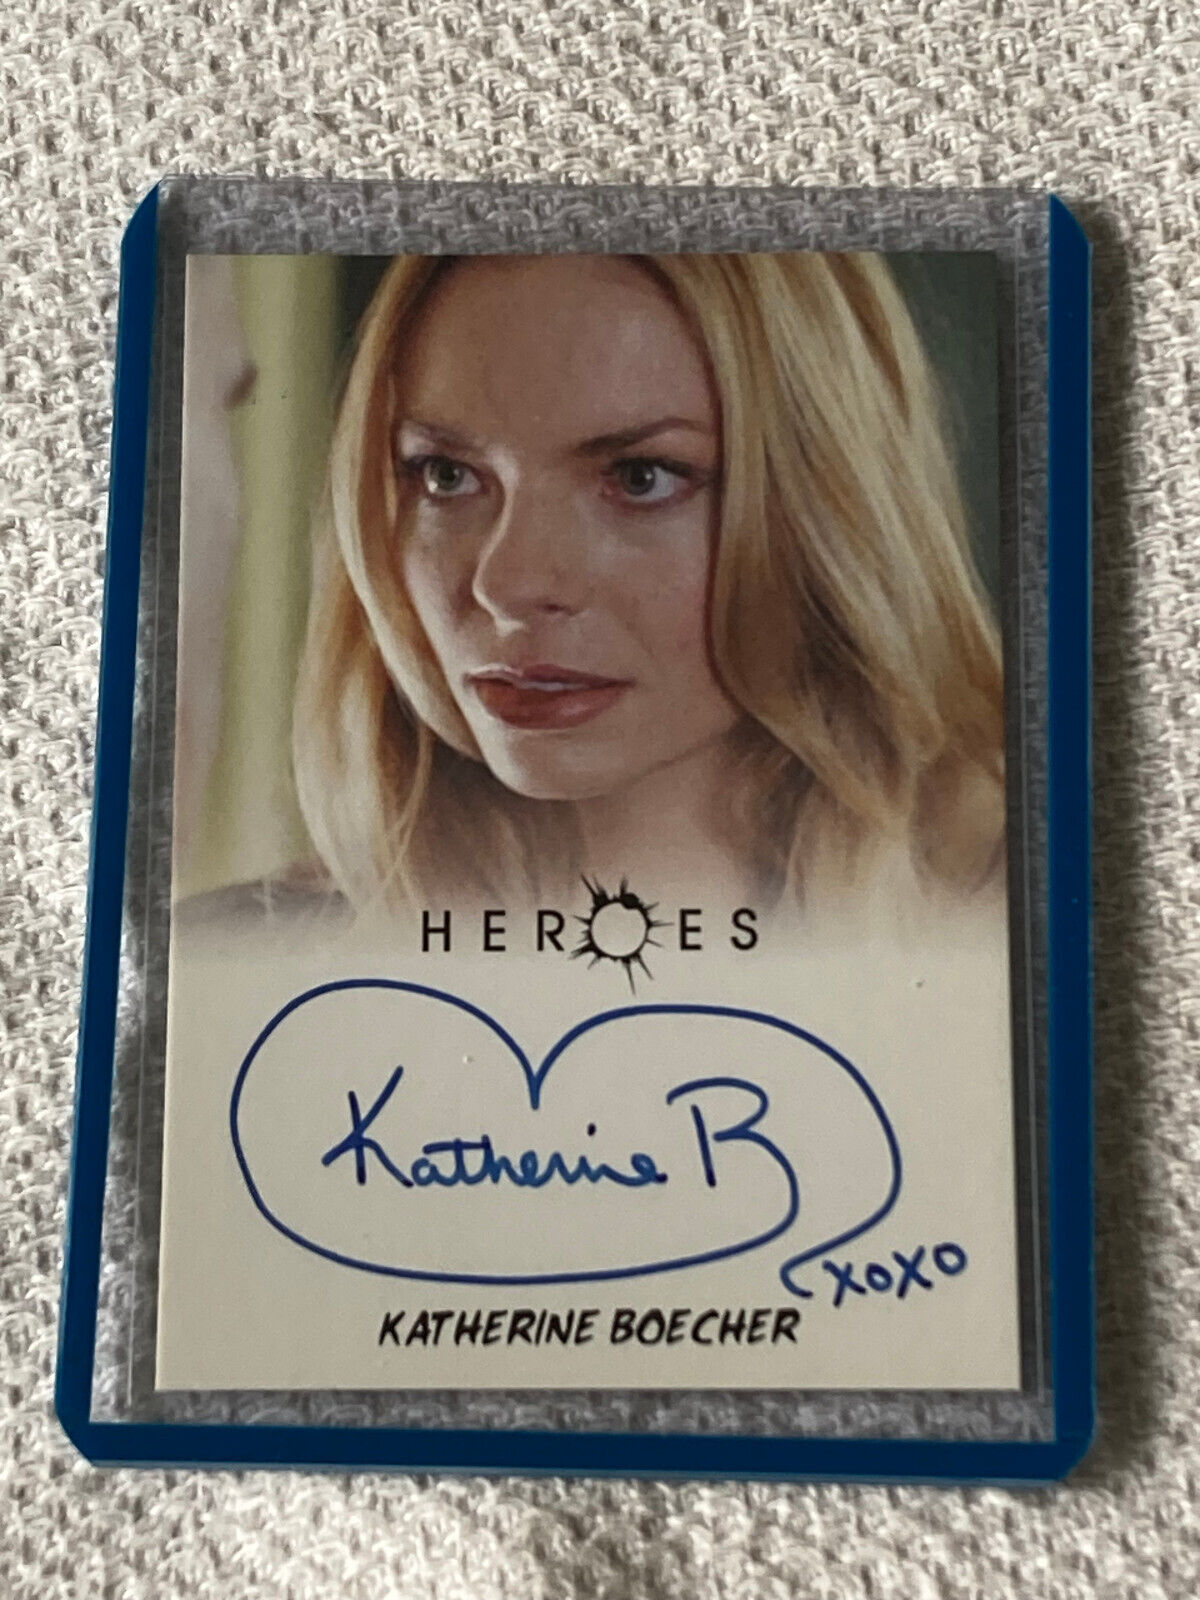 2010 Rittenhouse Heroes TV Show Autograph Card #Katherine Boecher NM